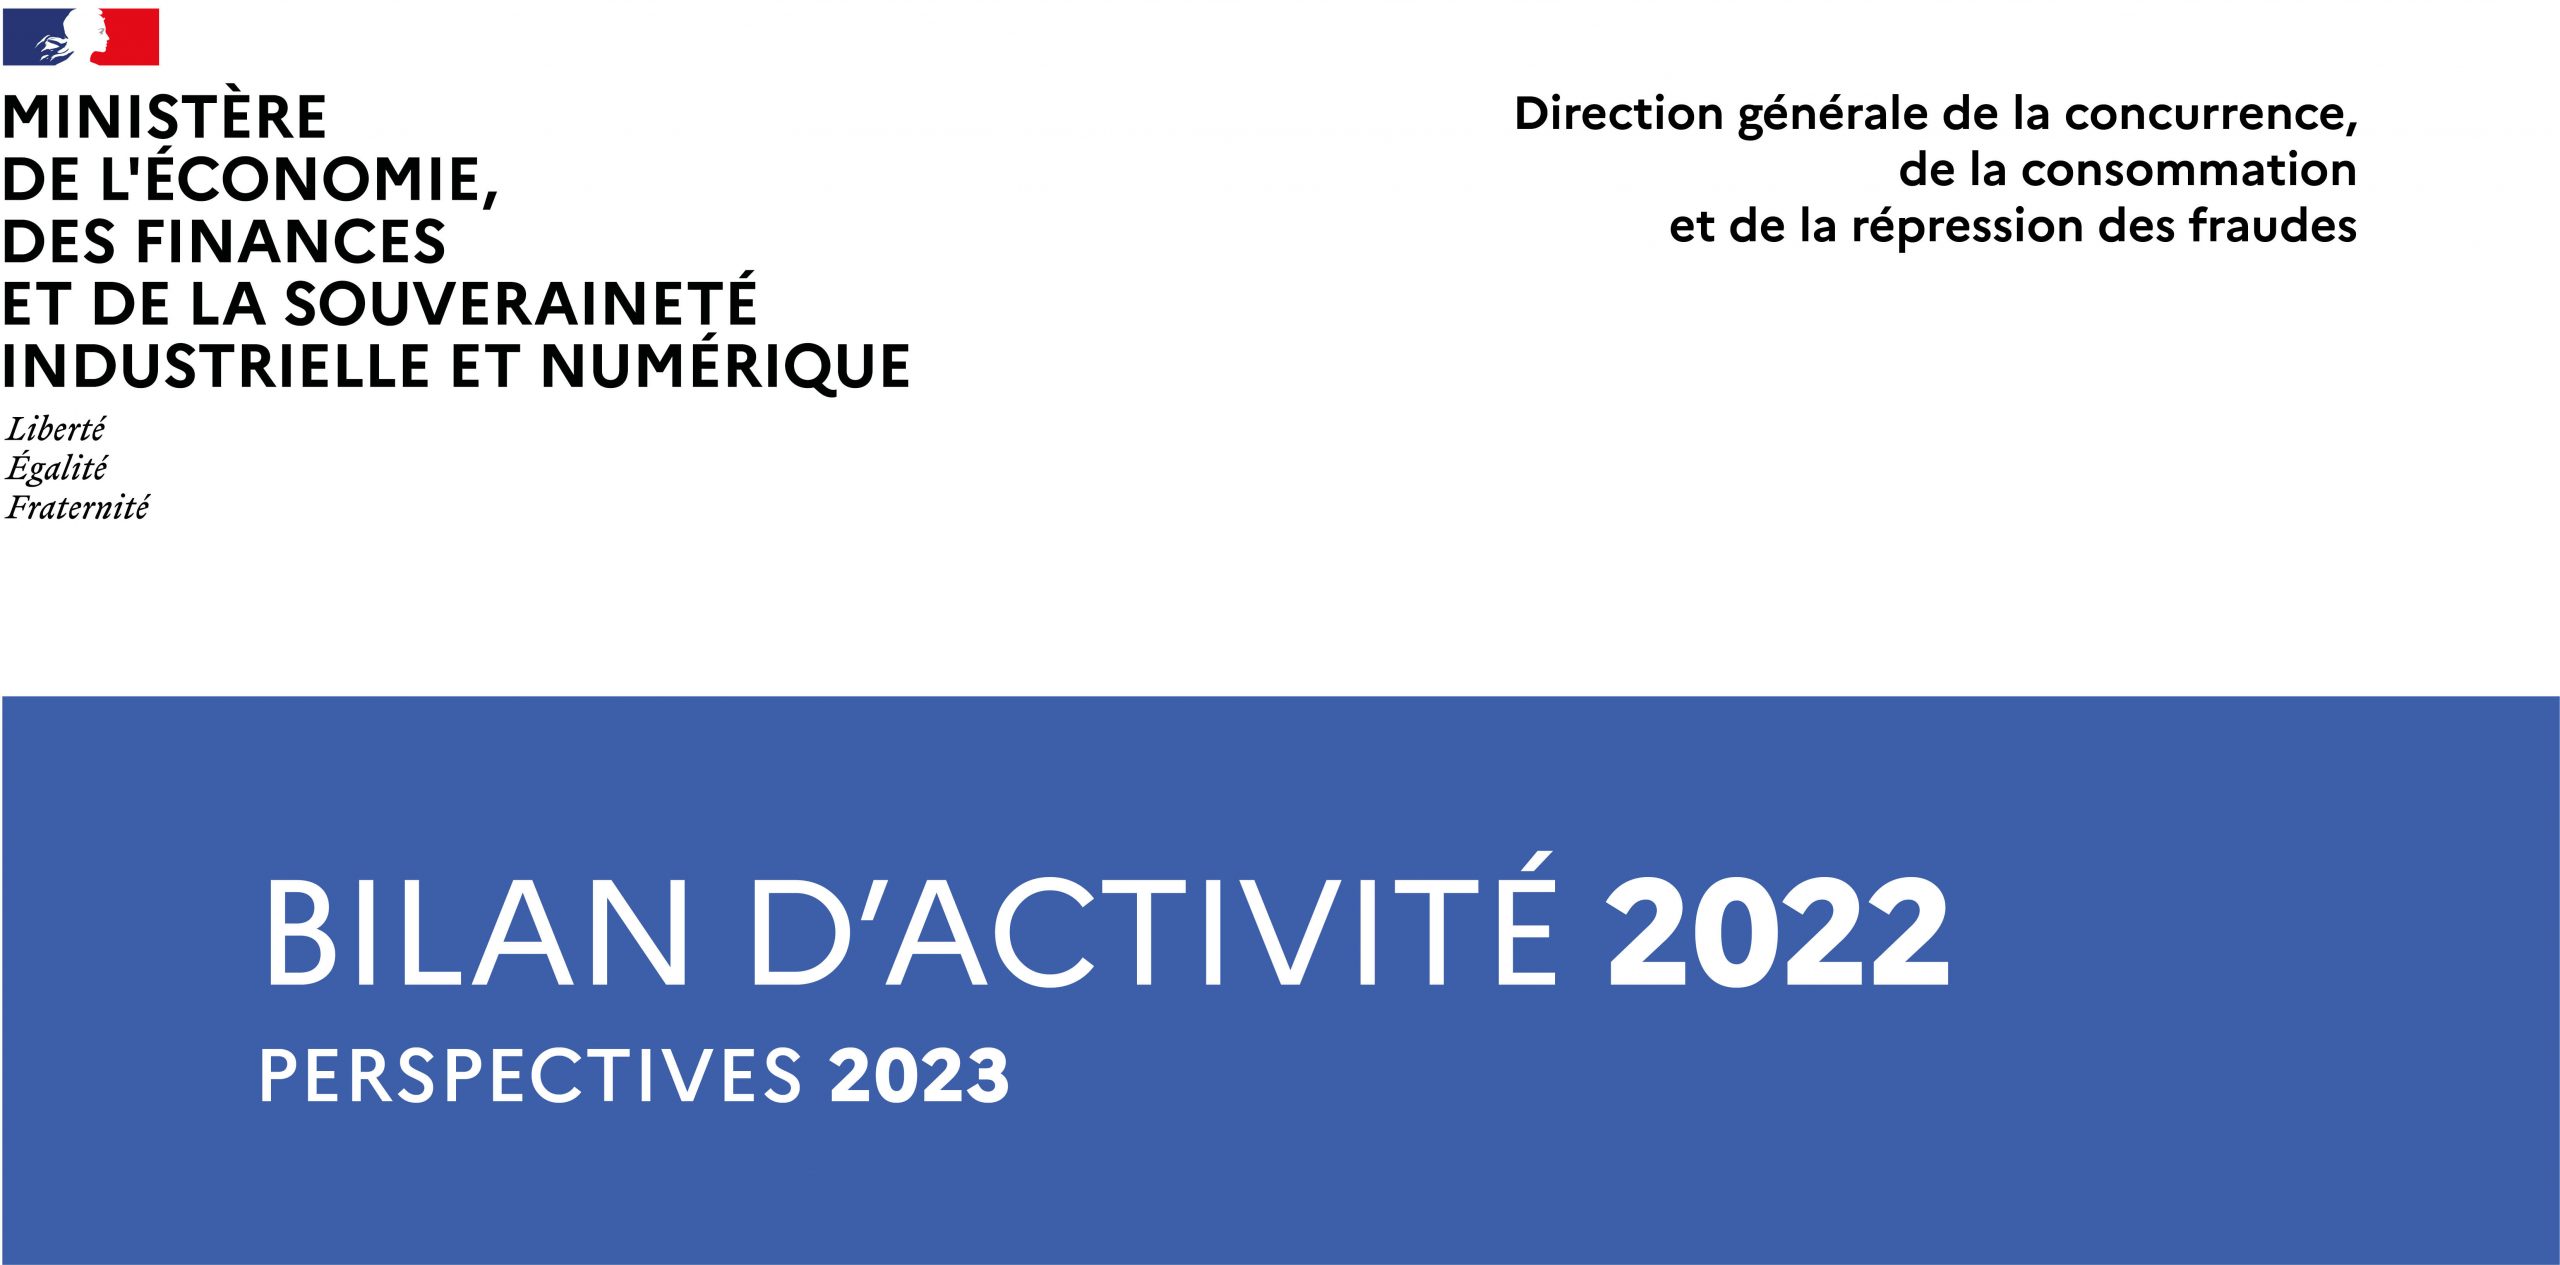 Bilan d'activité 2022 de la DGCCRF